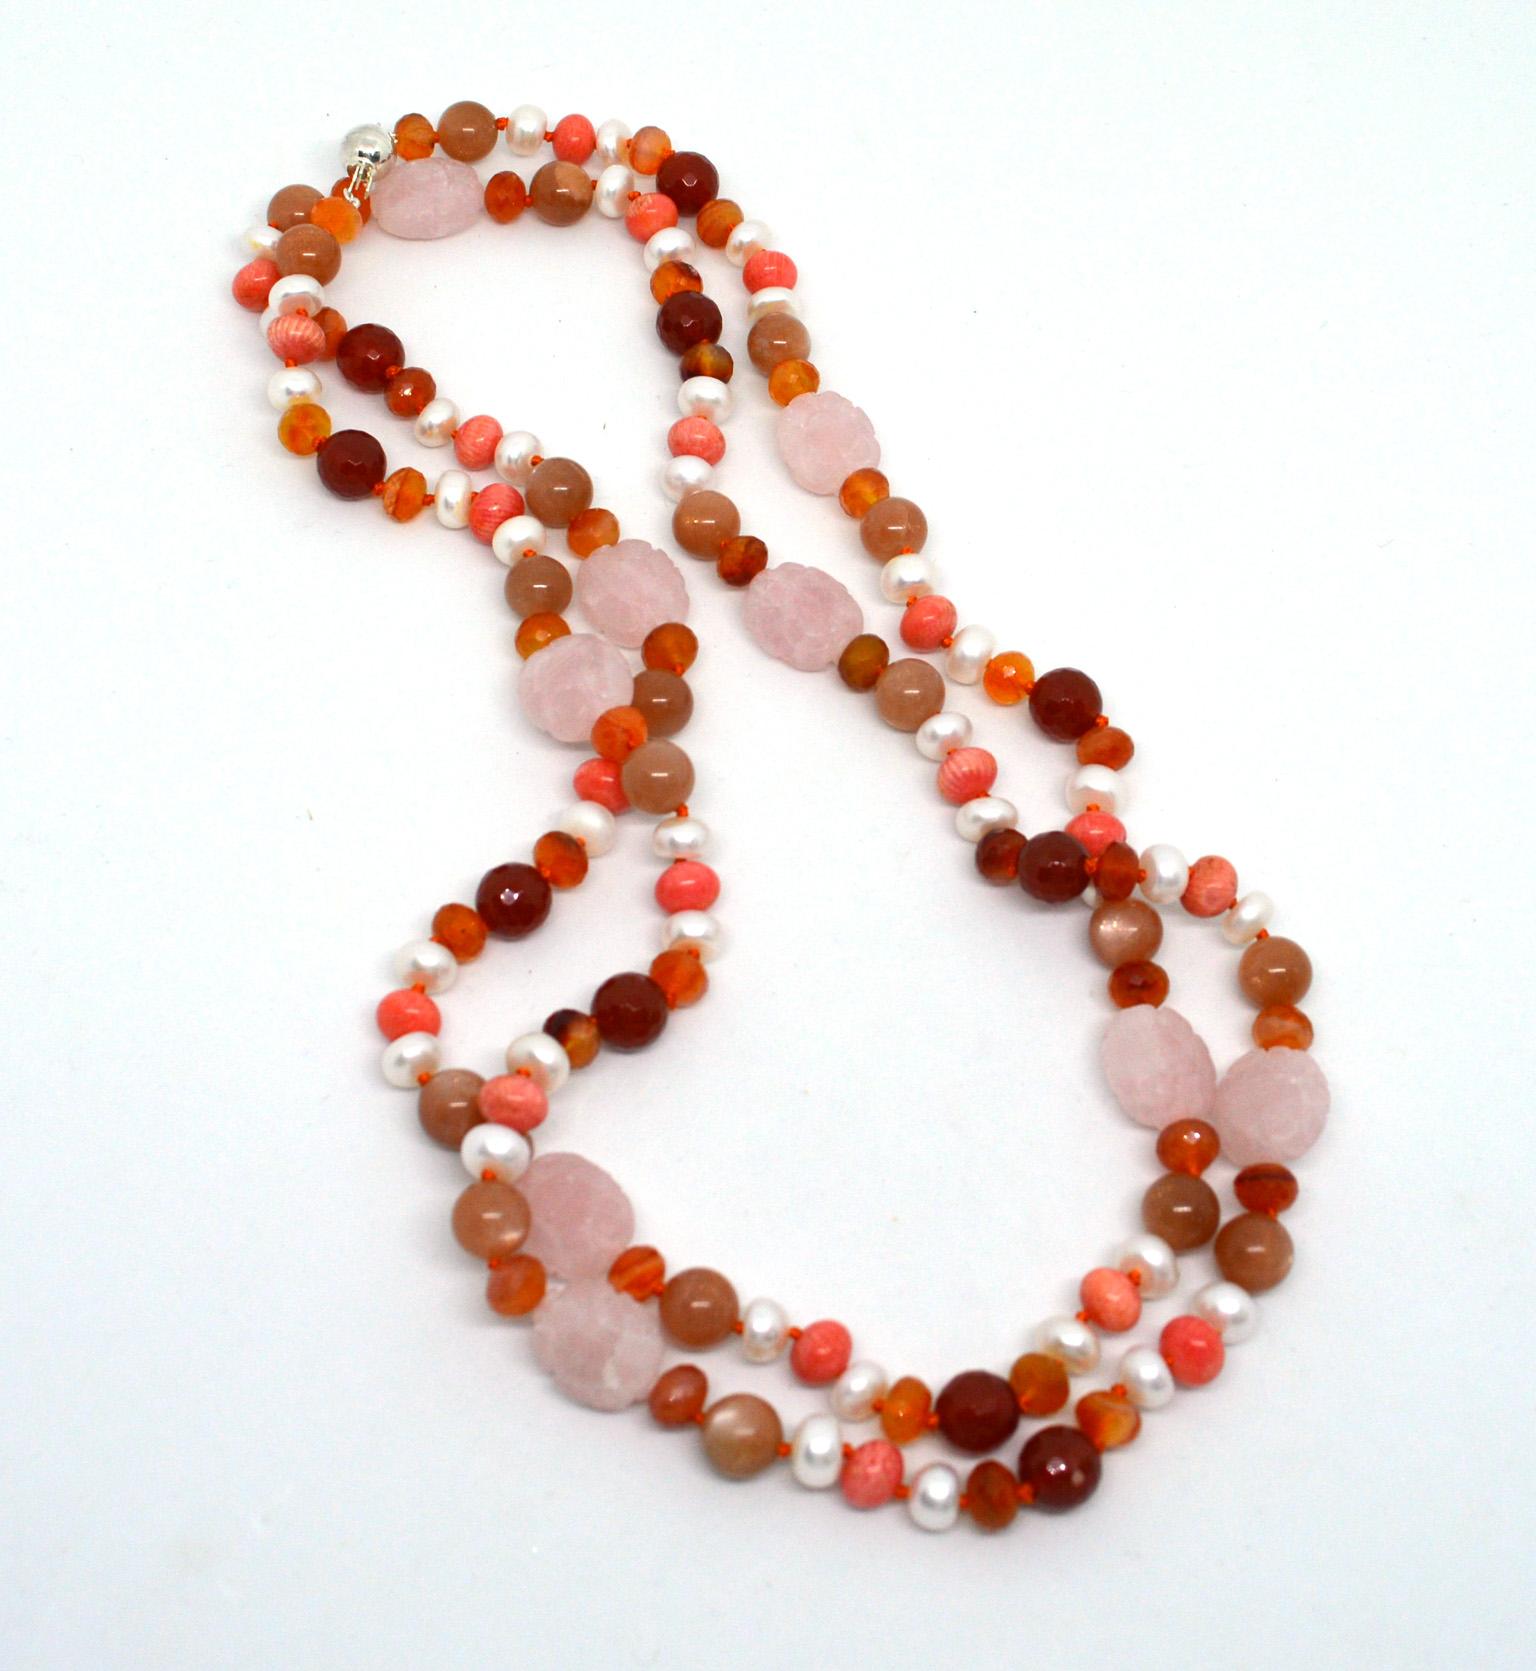 rose quartz and carnelian necklace